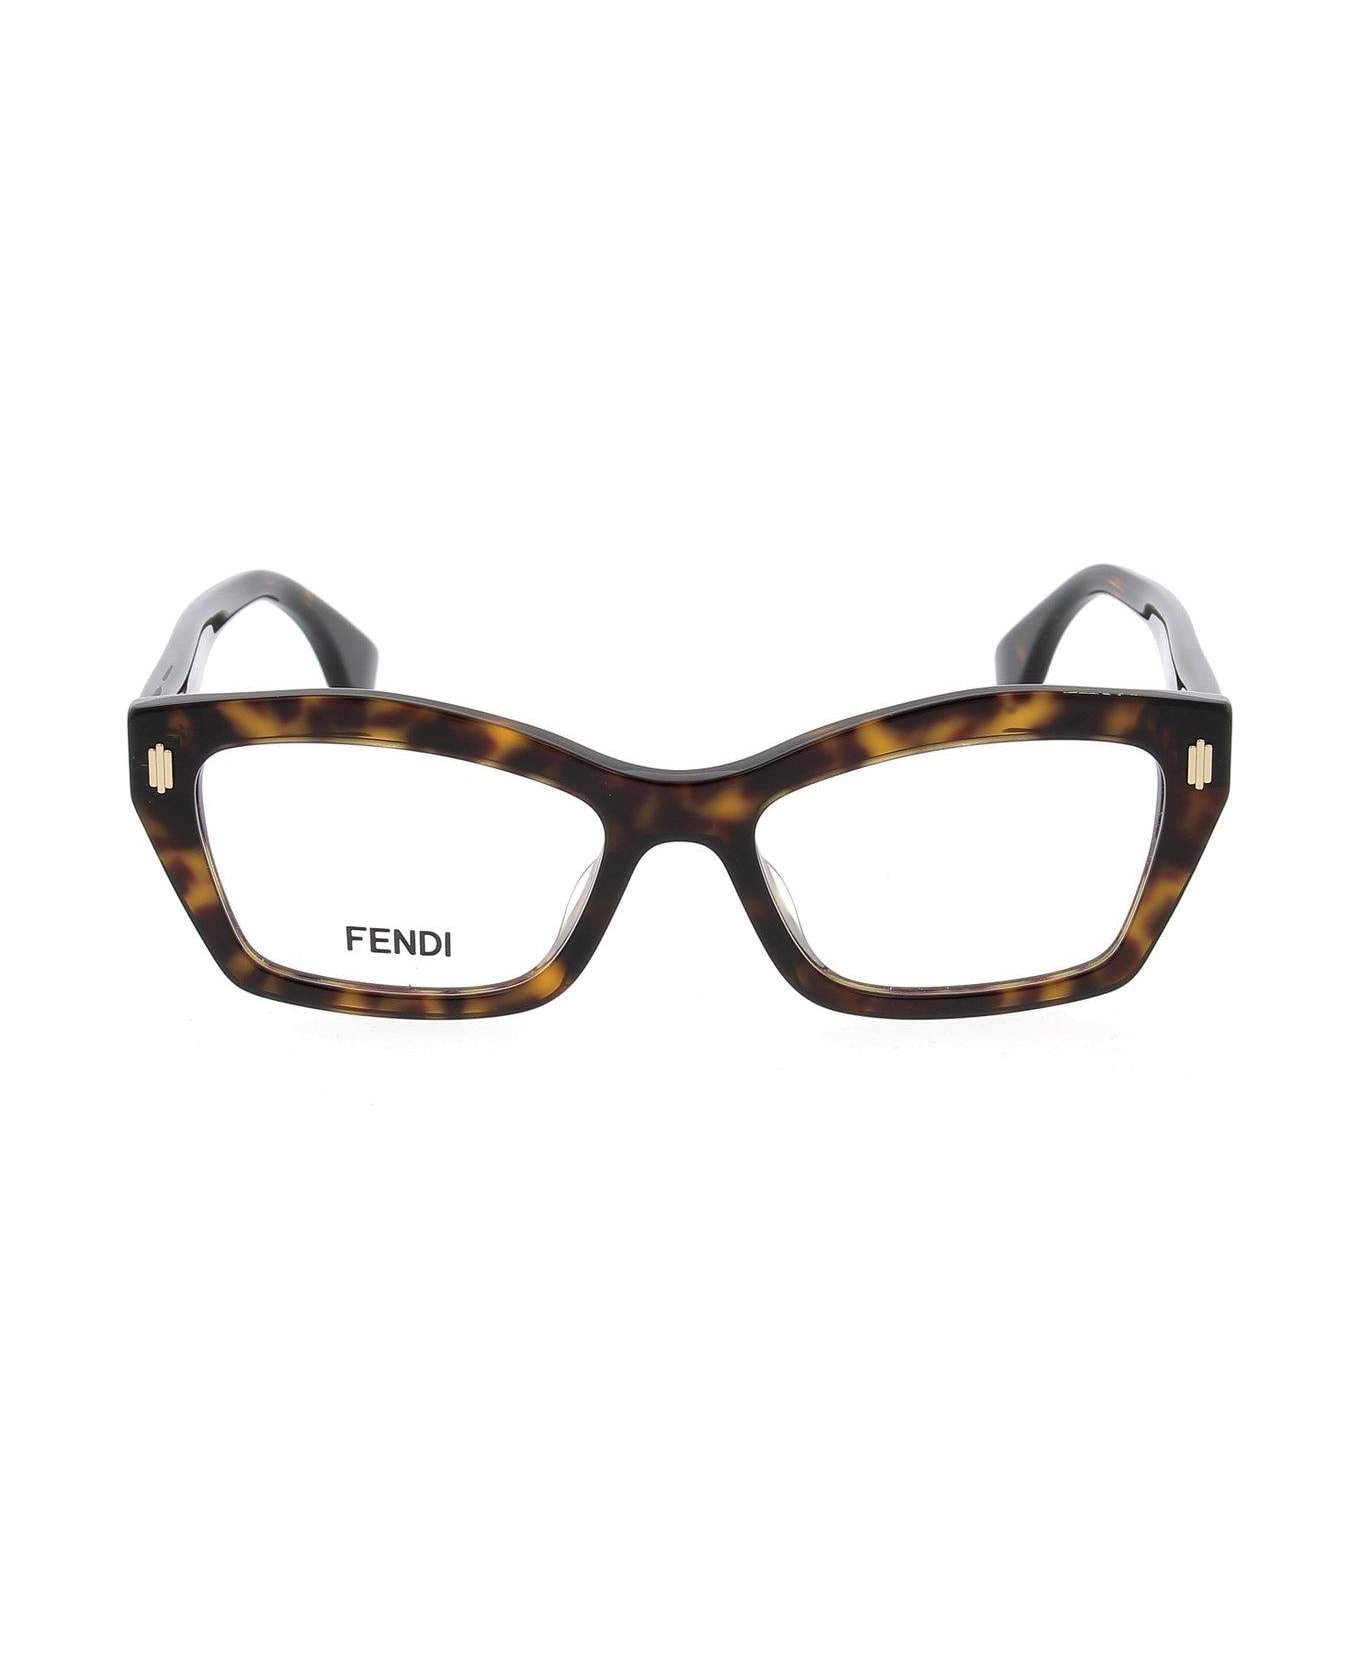 Fendi Eyewear Square Frame Glasses - 052